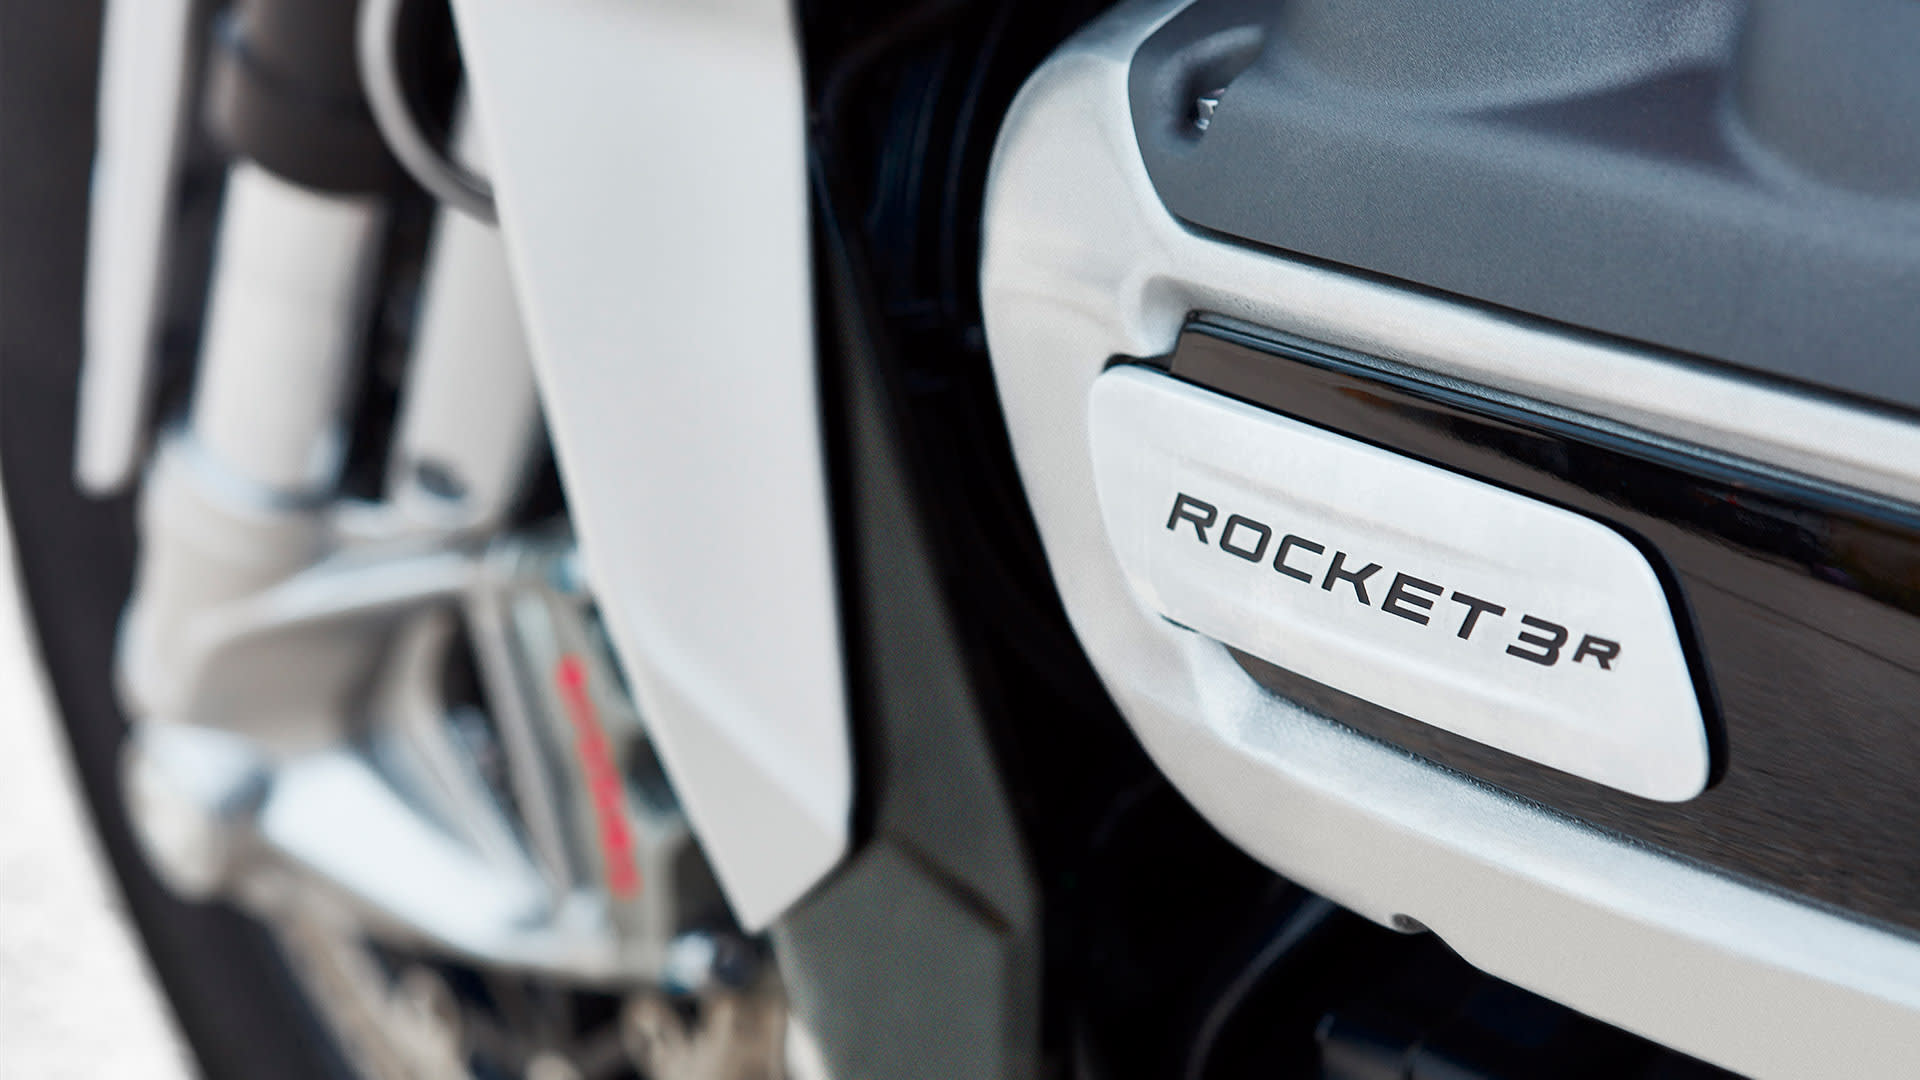 A Close up shot of the new Triumph Rocket 3 R 